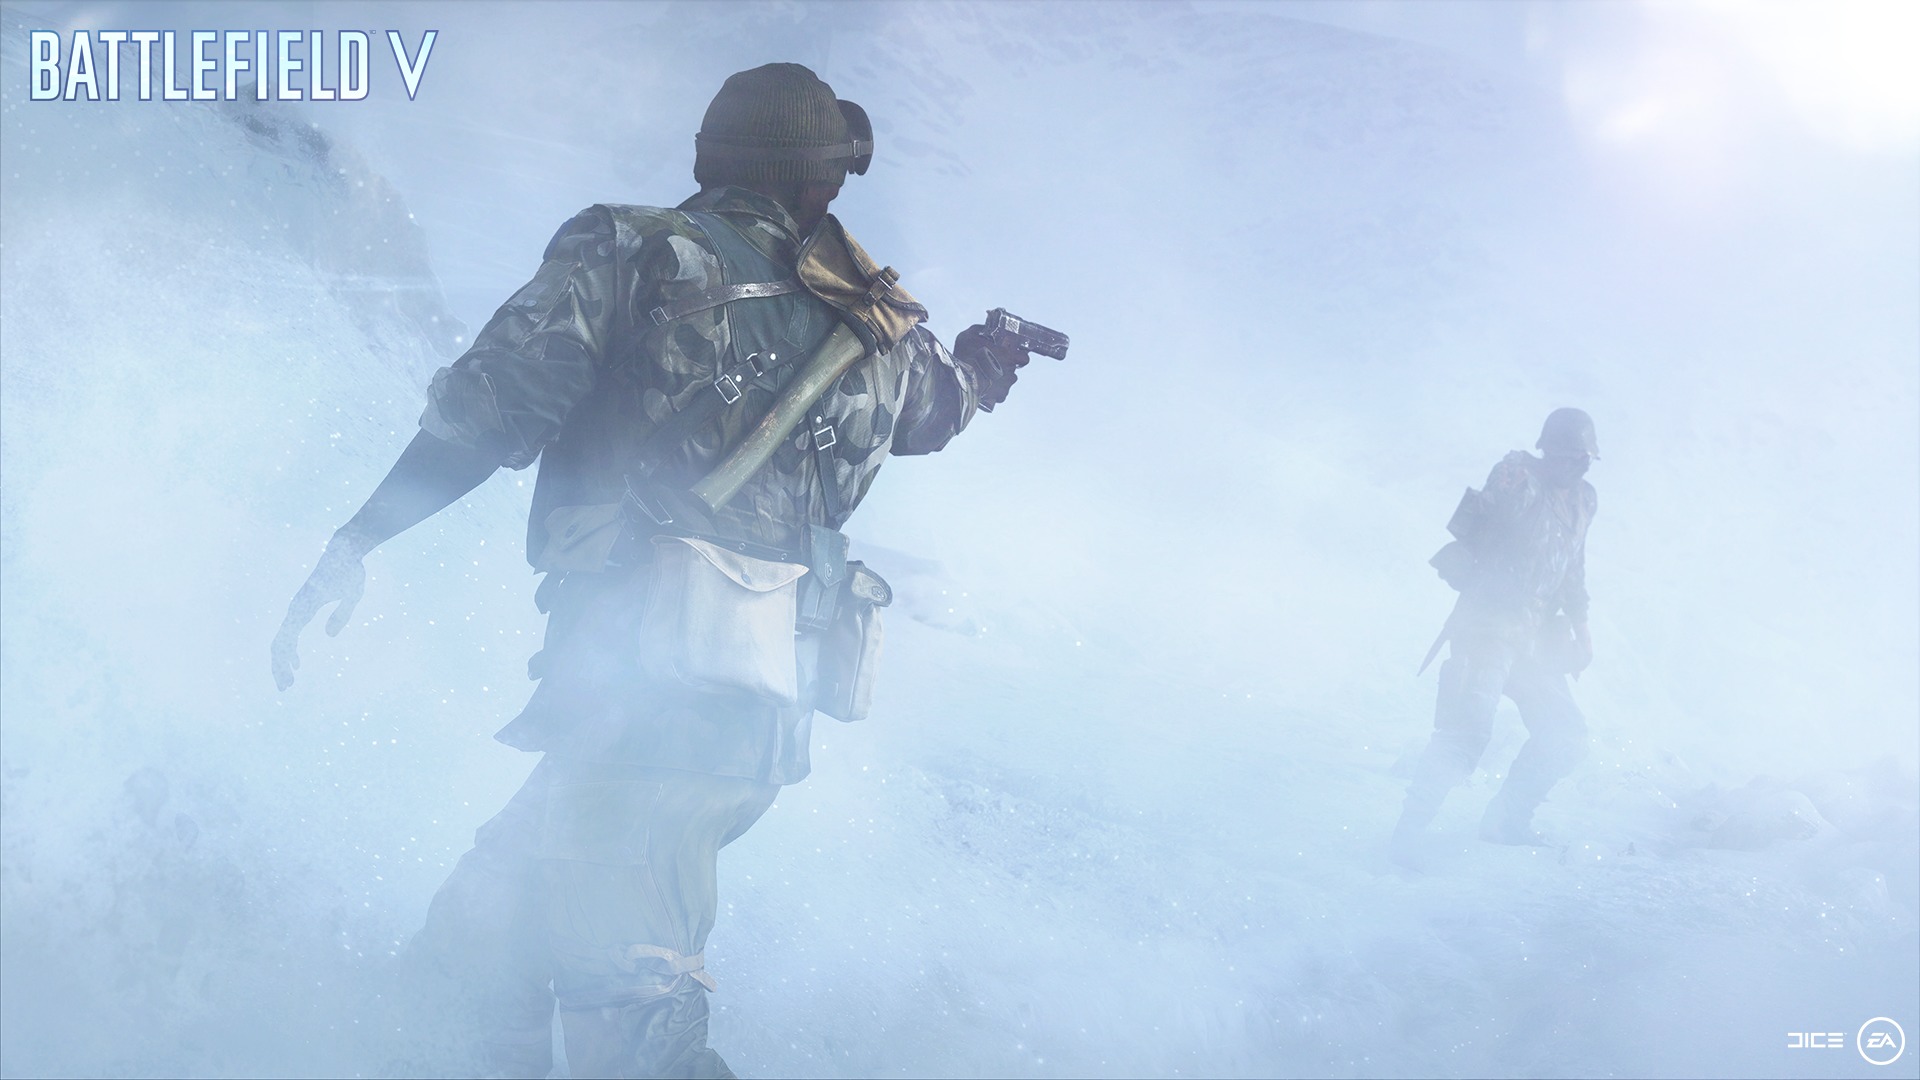 Dice toner ned "galskapen" - lover autentisk tilpasning i "Battlefield V".